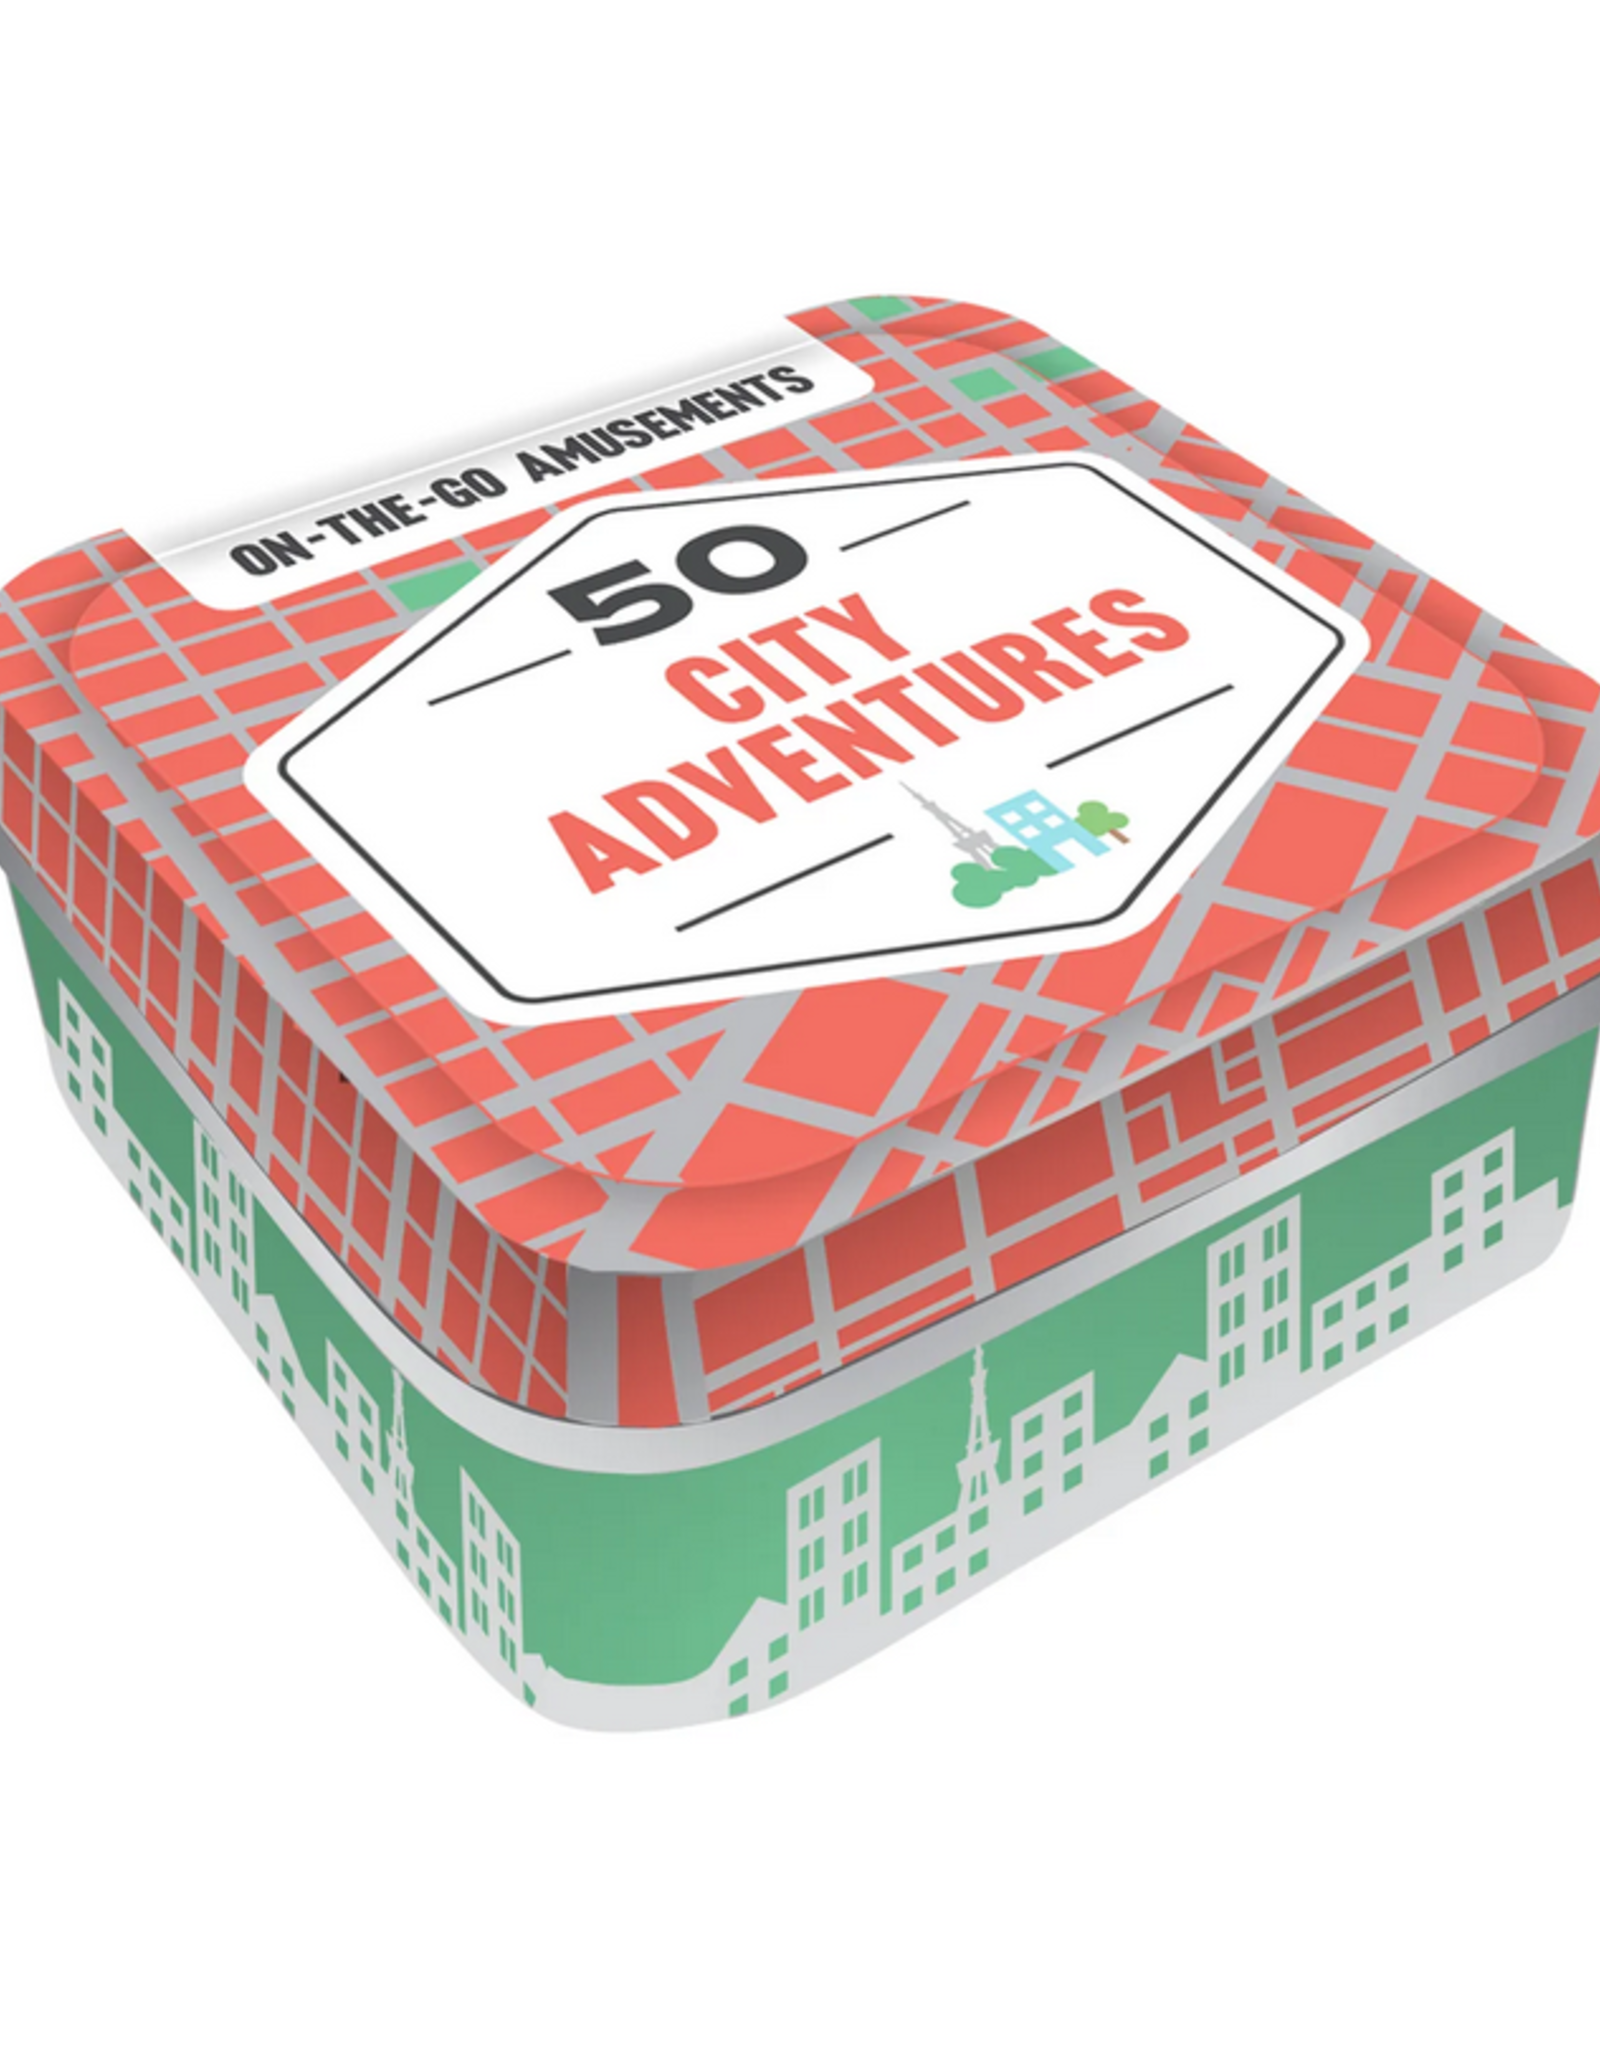 Chronicle Books On-The-Go Amusements: 50 City Adventures